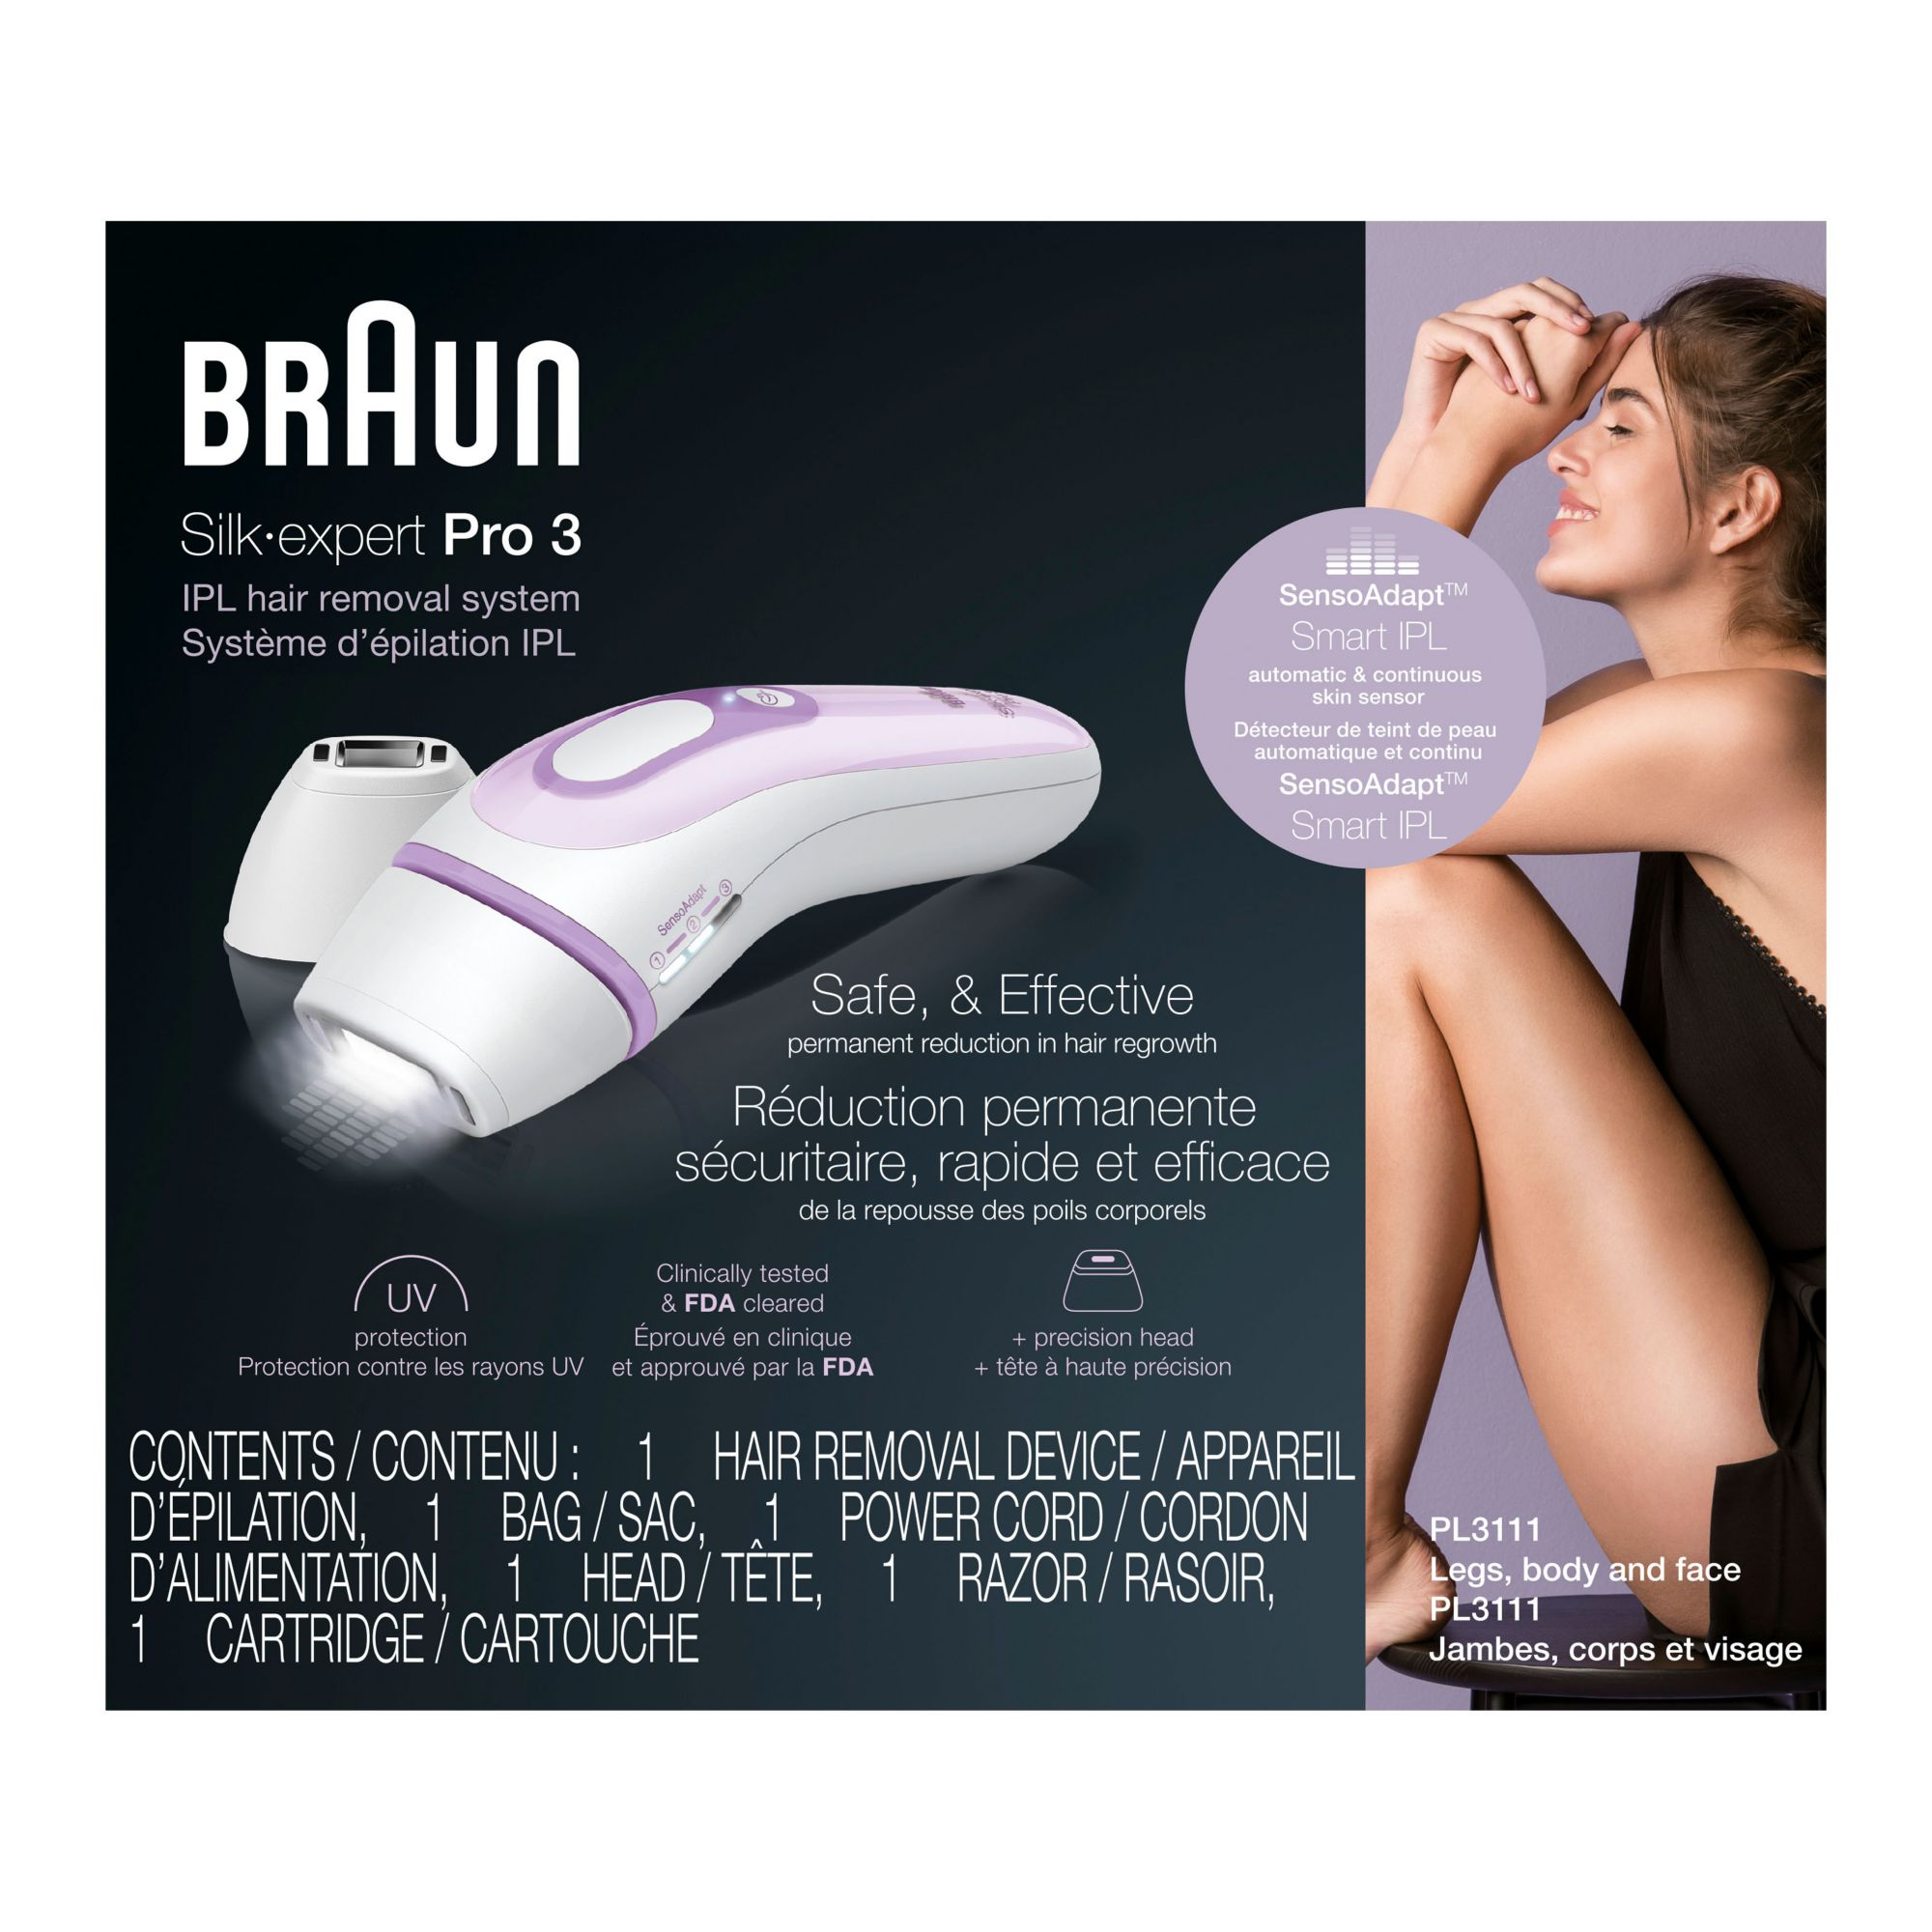 Braun Silk Expert Pro 5 IPL, PL5137 - Women's Hair Removal